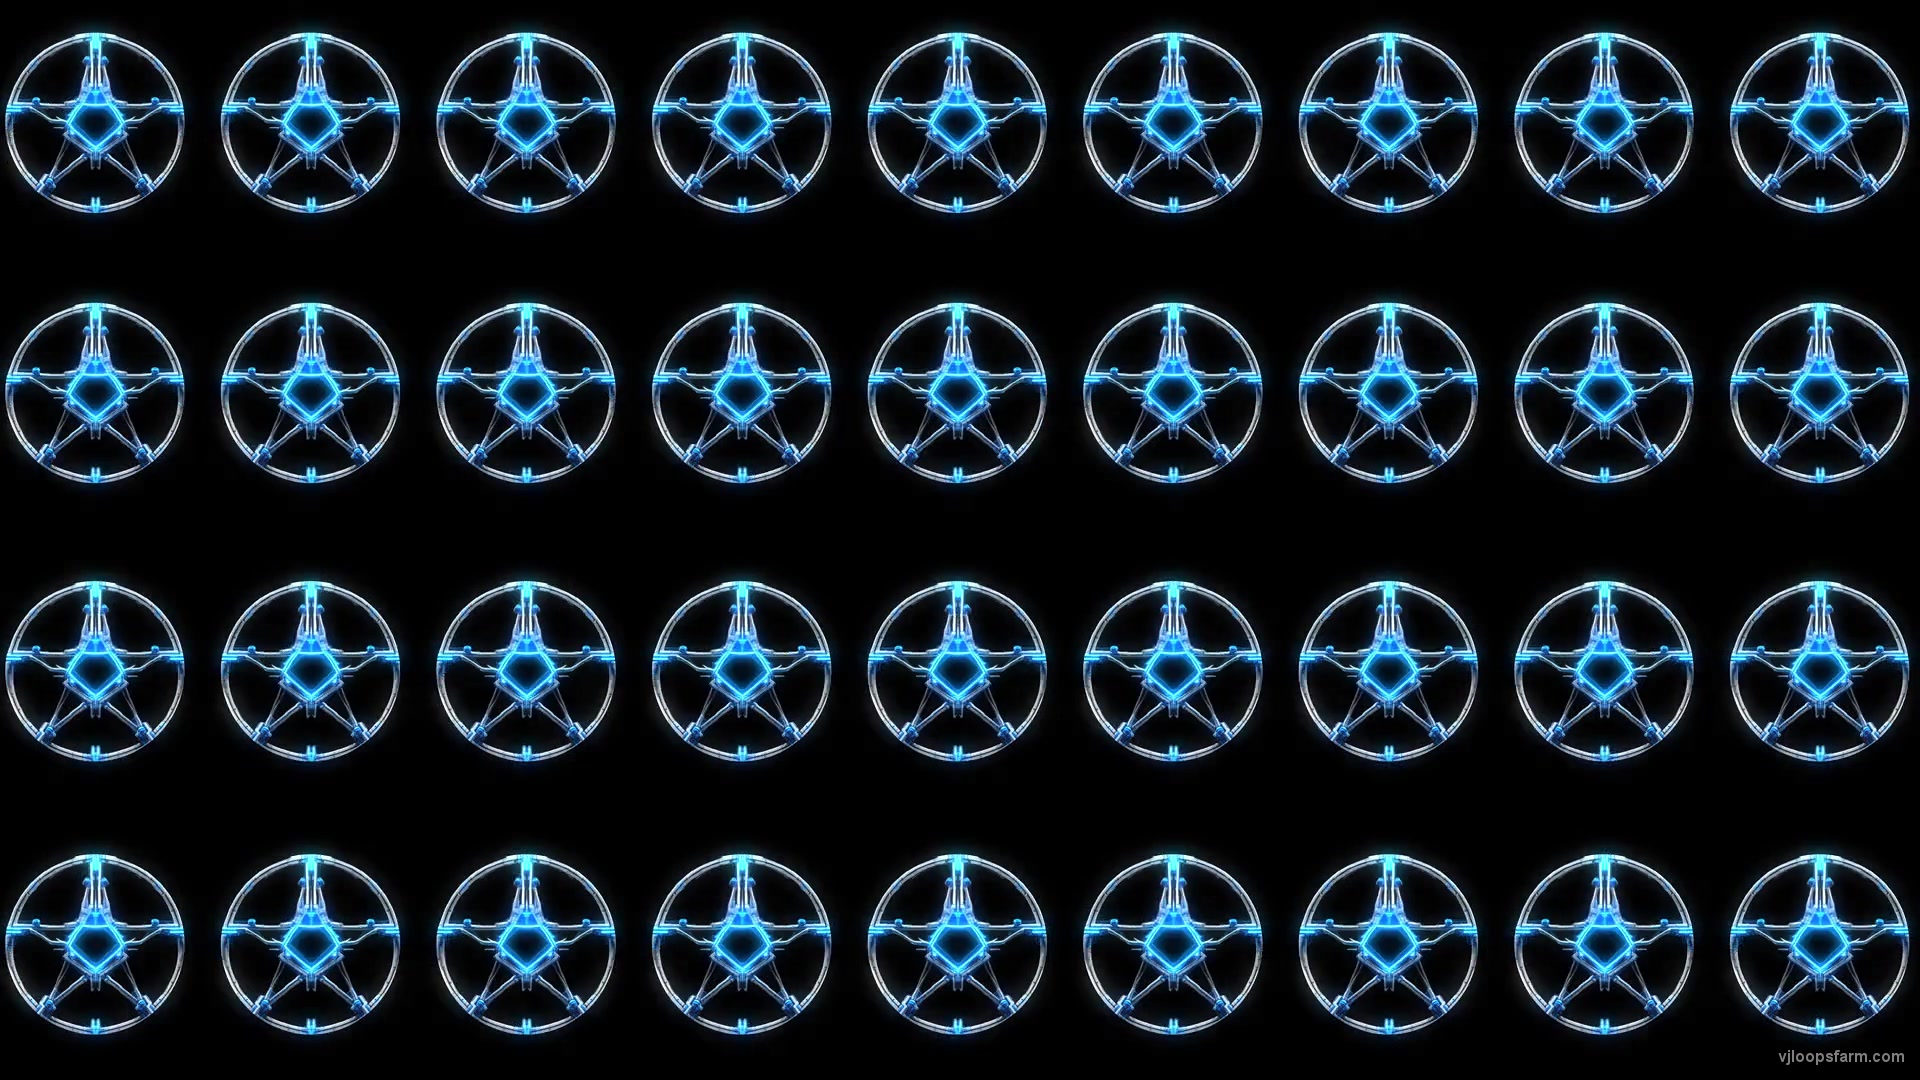 vj video background Cyberpunk-Star-Pentagram-Sign-Pattern-UltraHD-Video-Motion-Background-VJ-Loop-dbnrni-1920_003